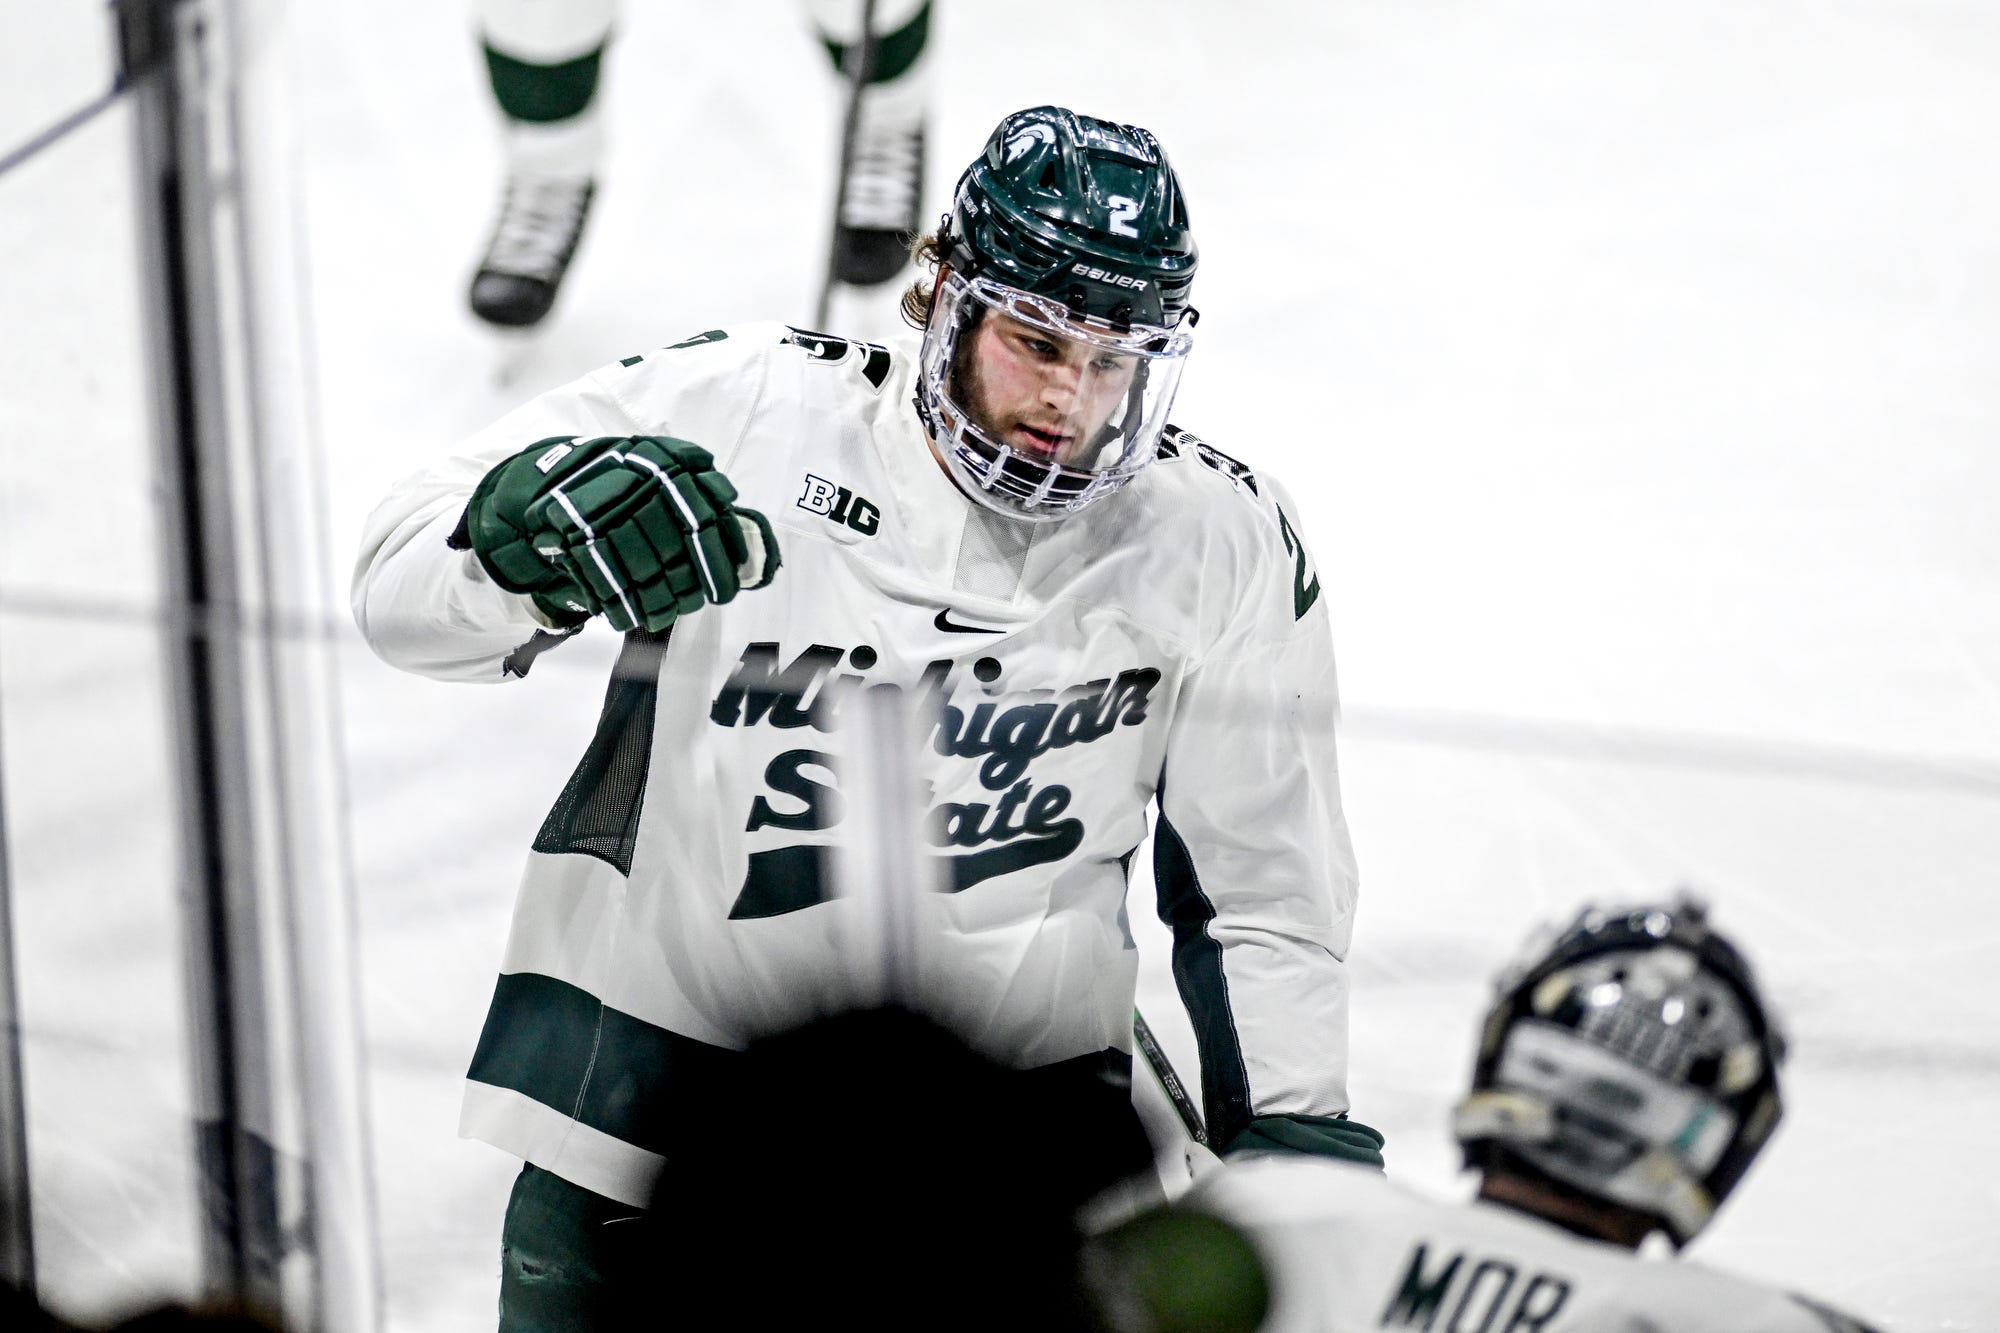 MSU Hockey receives No. 1 seed, will face Western Michigan in NCAA